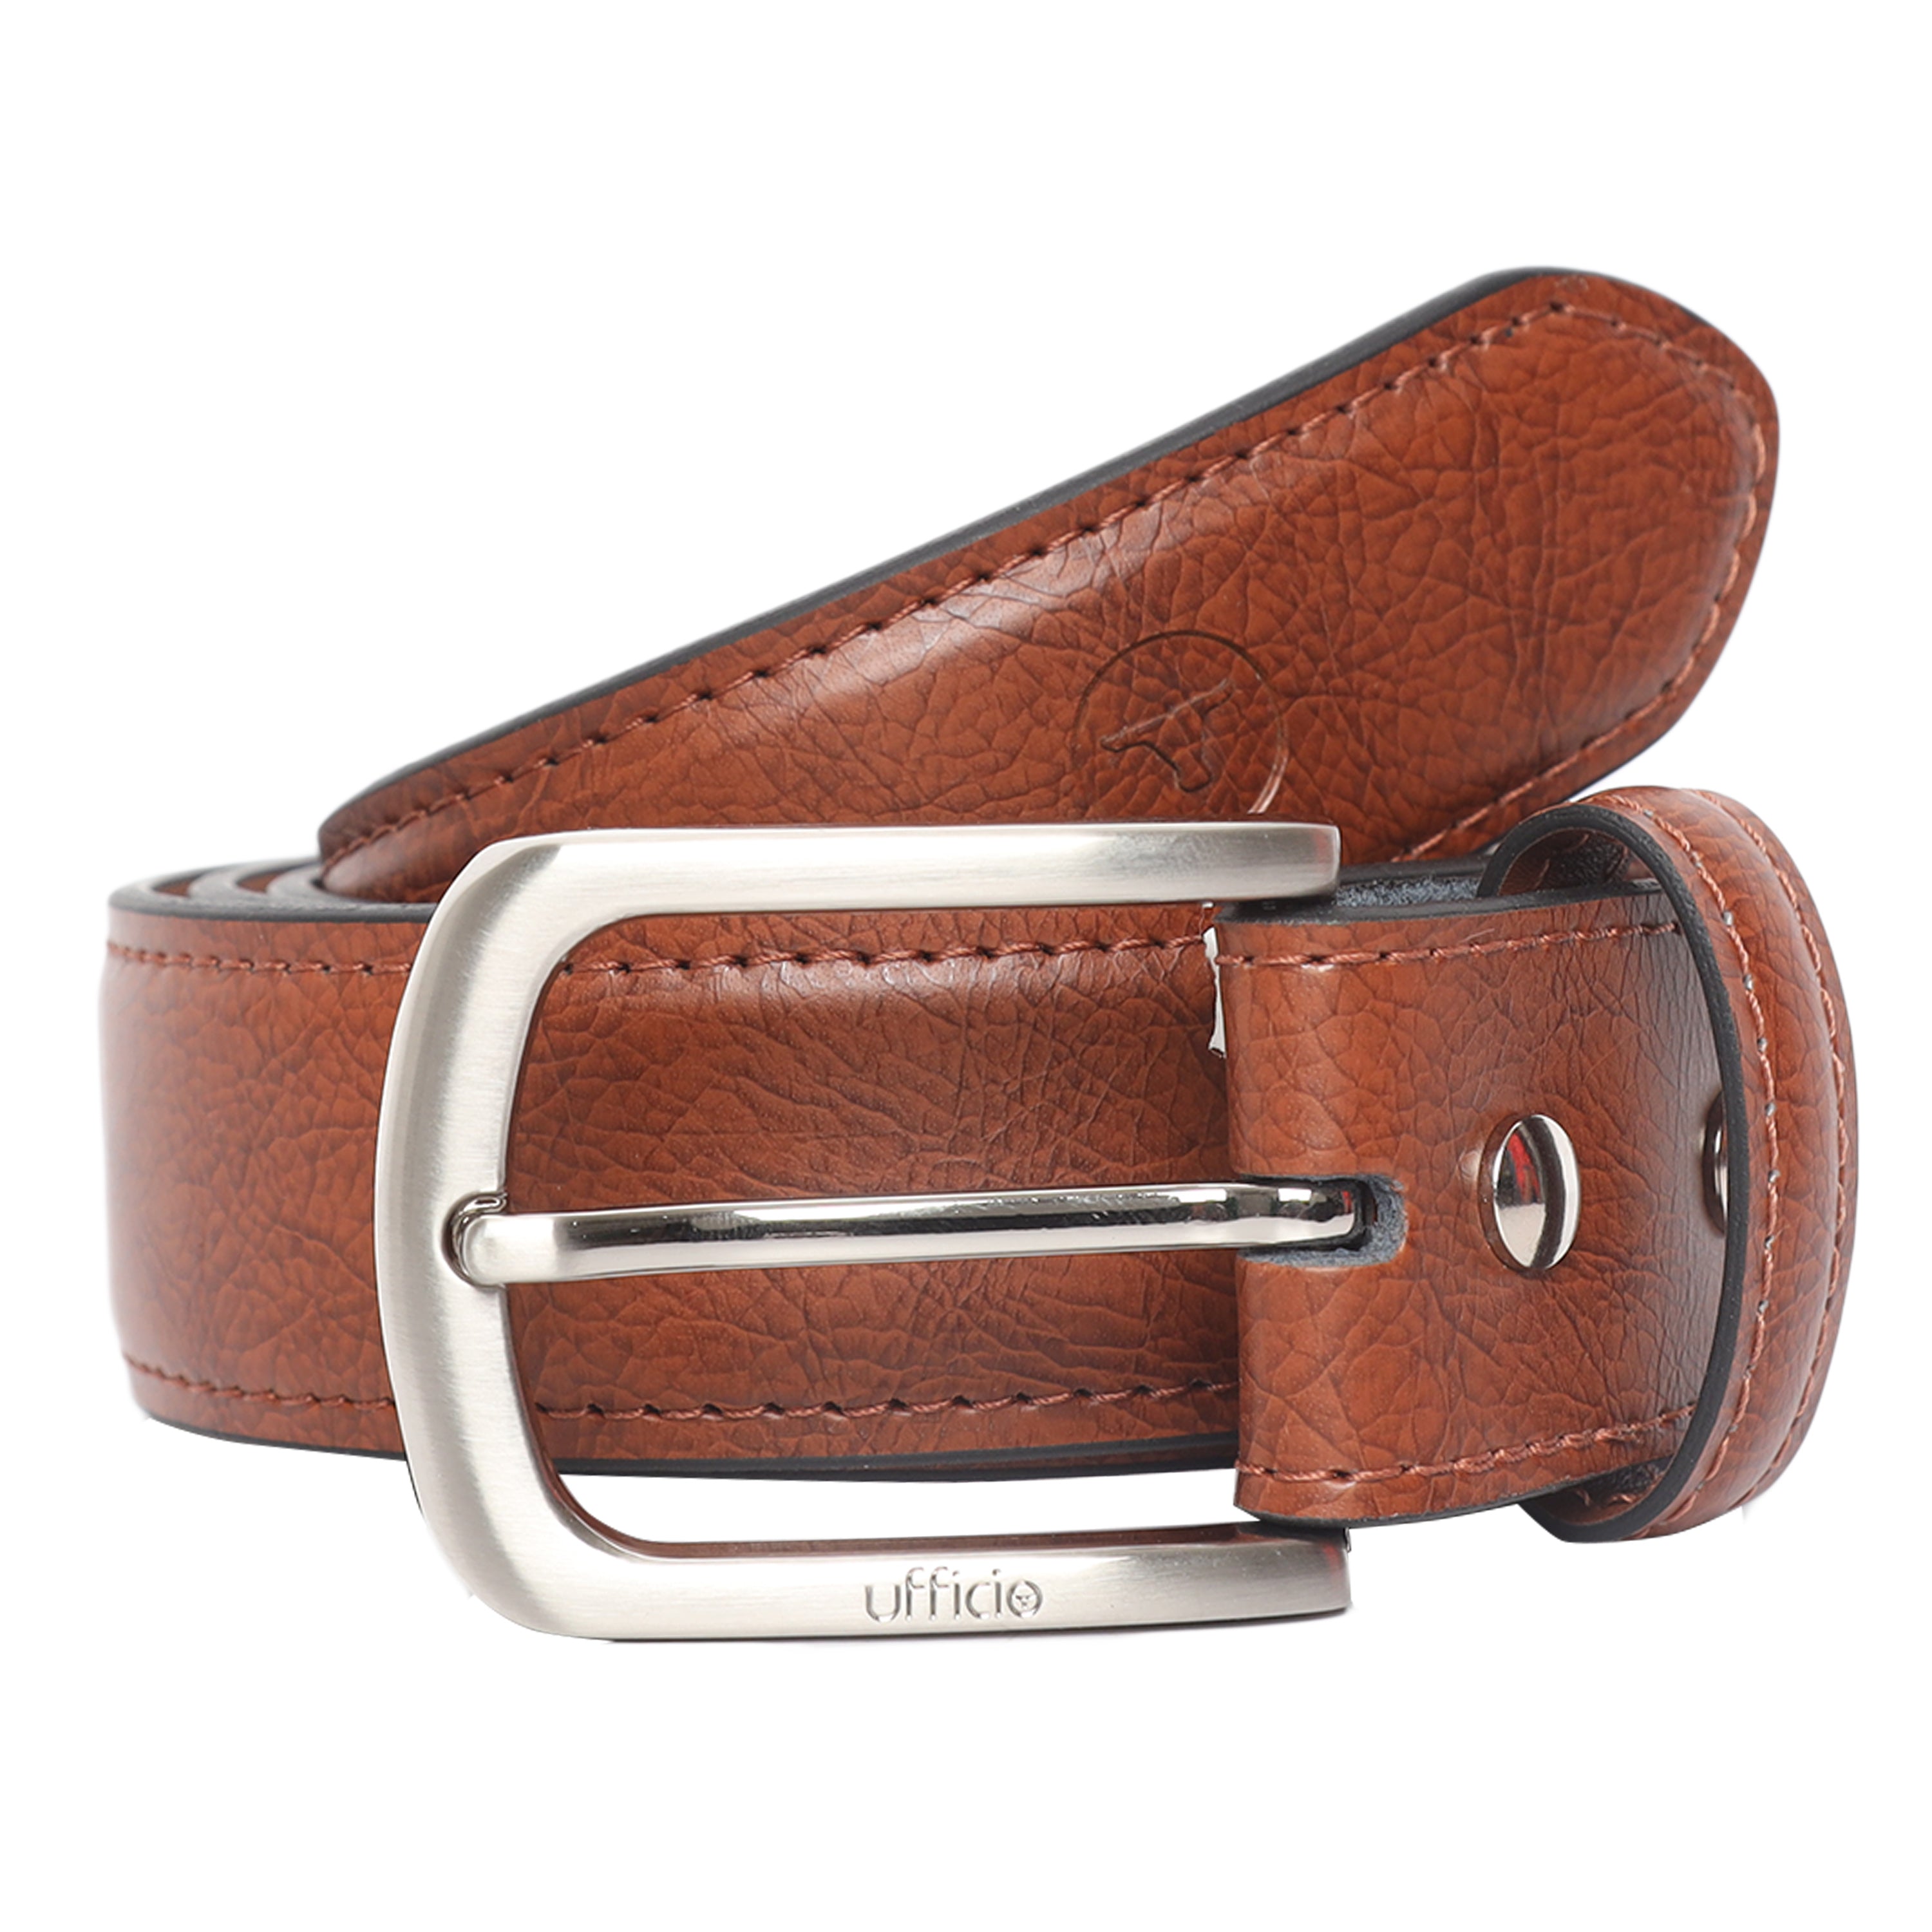 Ufficio Men's Double Color Genuine Leather Belt (Casual, Tan)